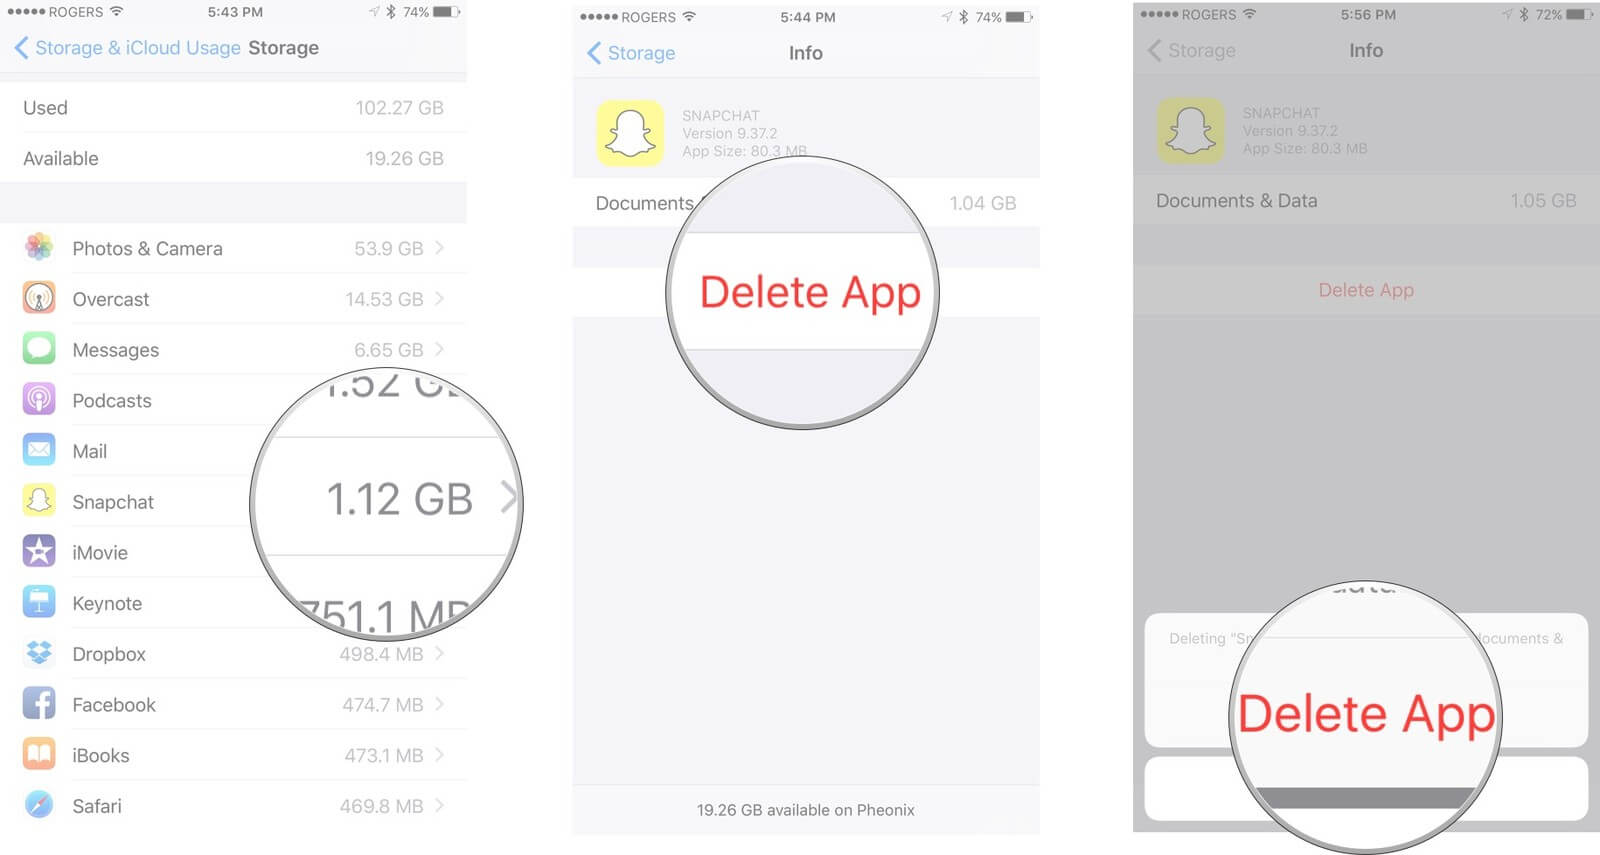 Free Up Storage Via Delete Apps